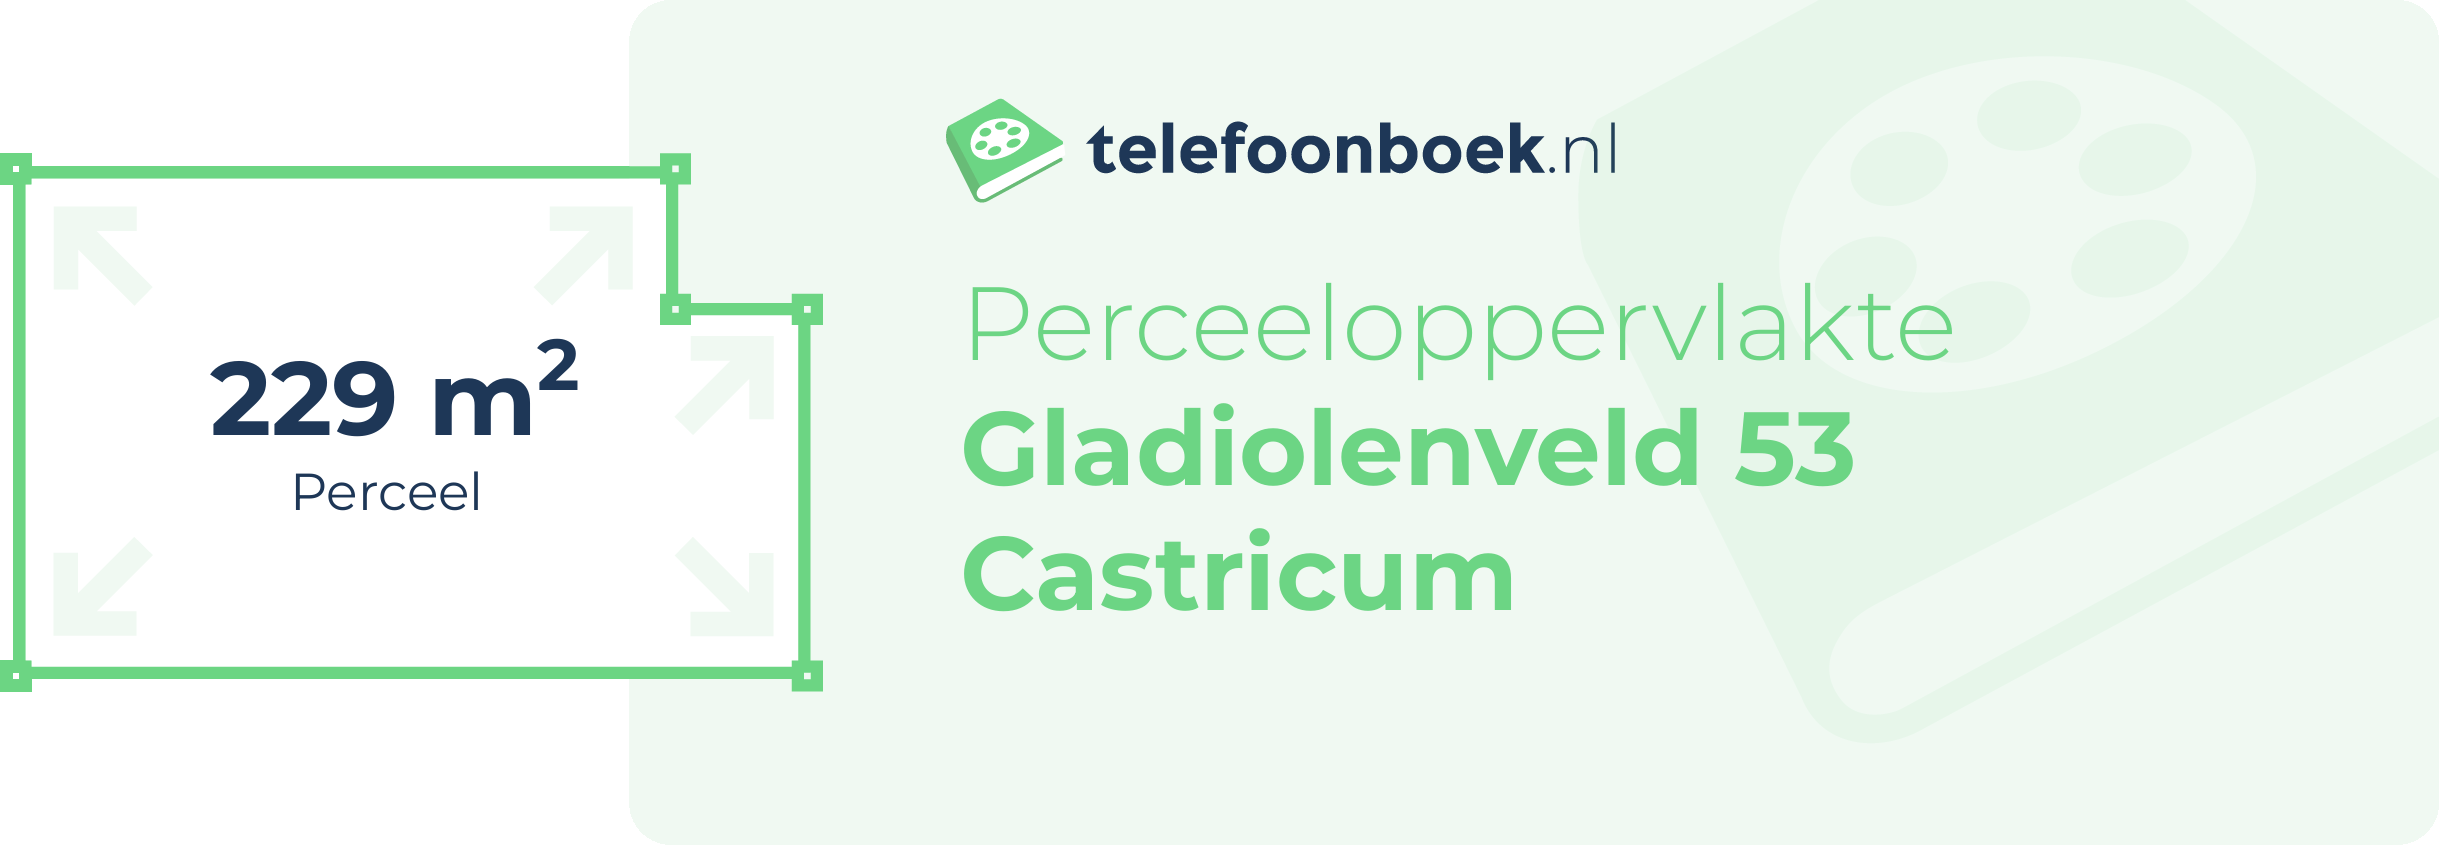 Perceeloppervlakte Gladiolenveld 53 Castricum